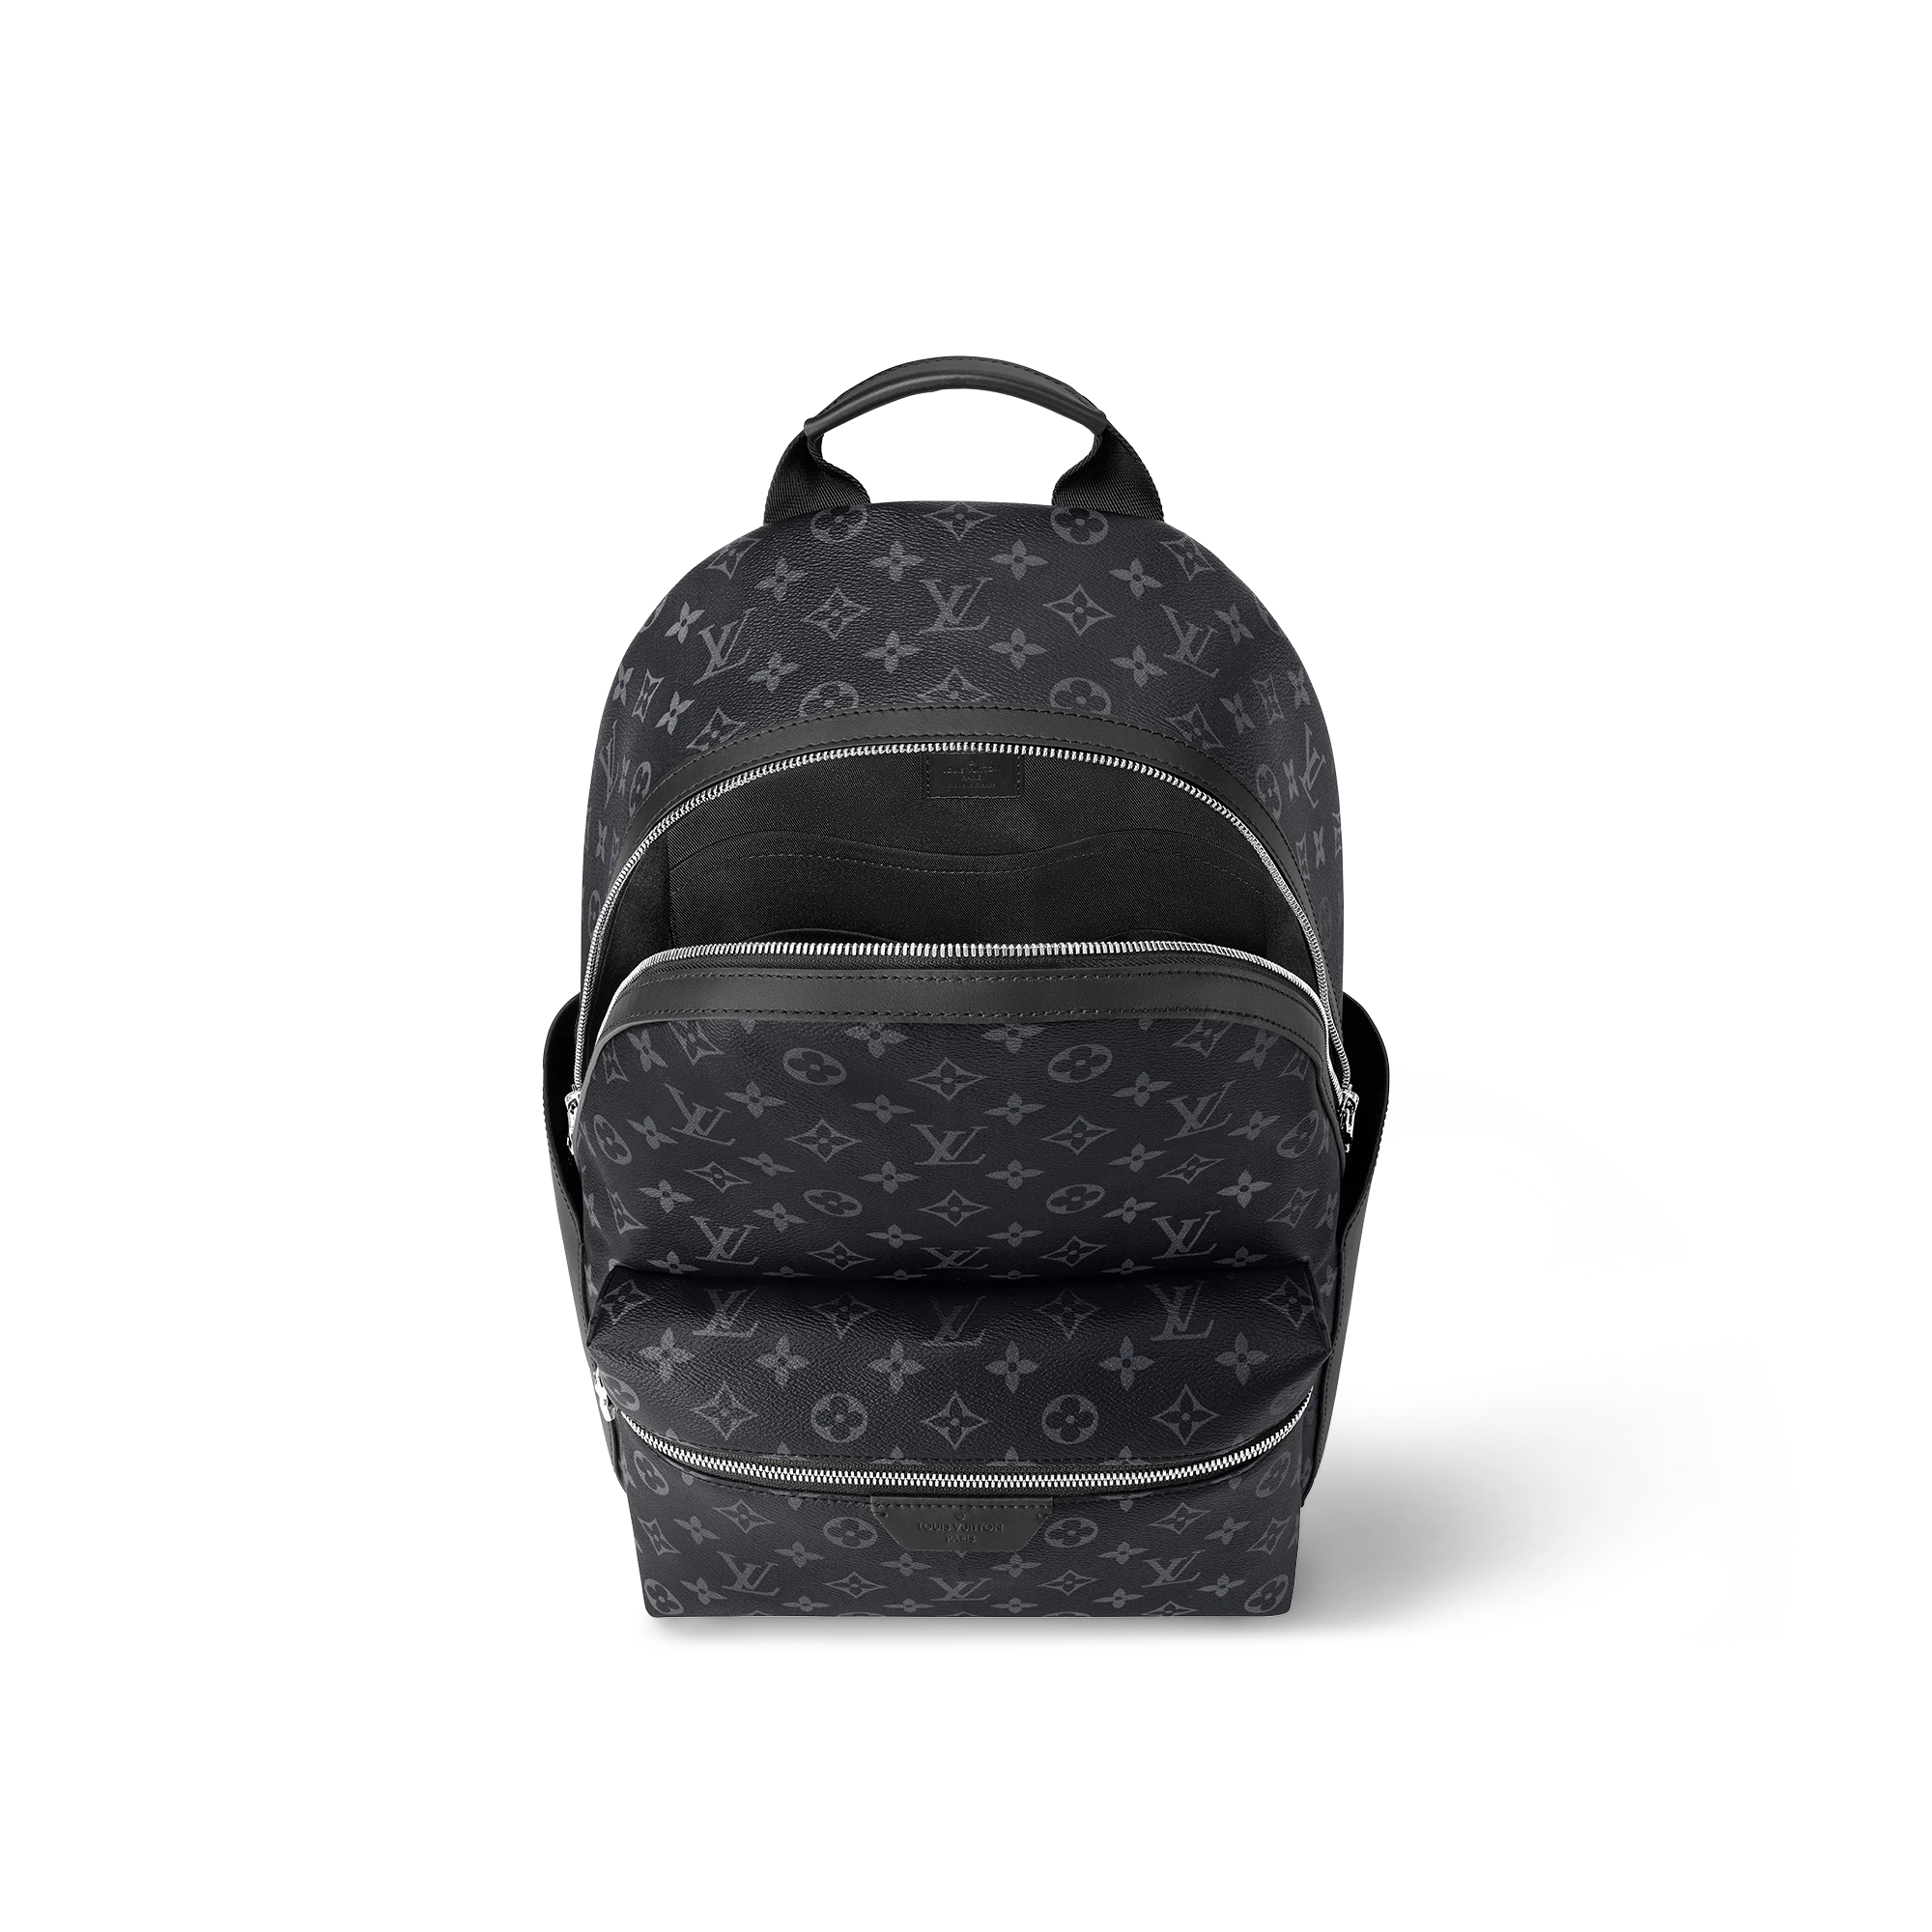 LV Backpack Vendor Link – Resell-Hub